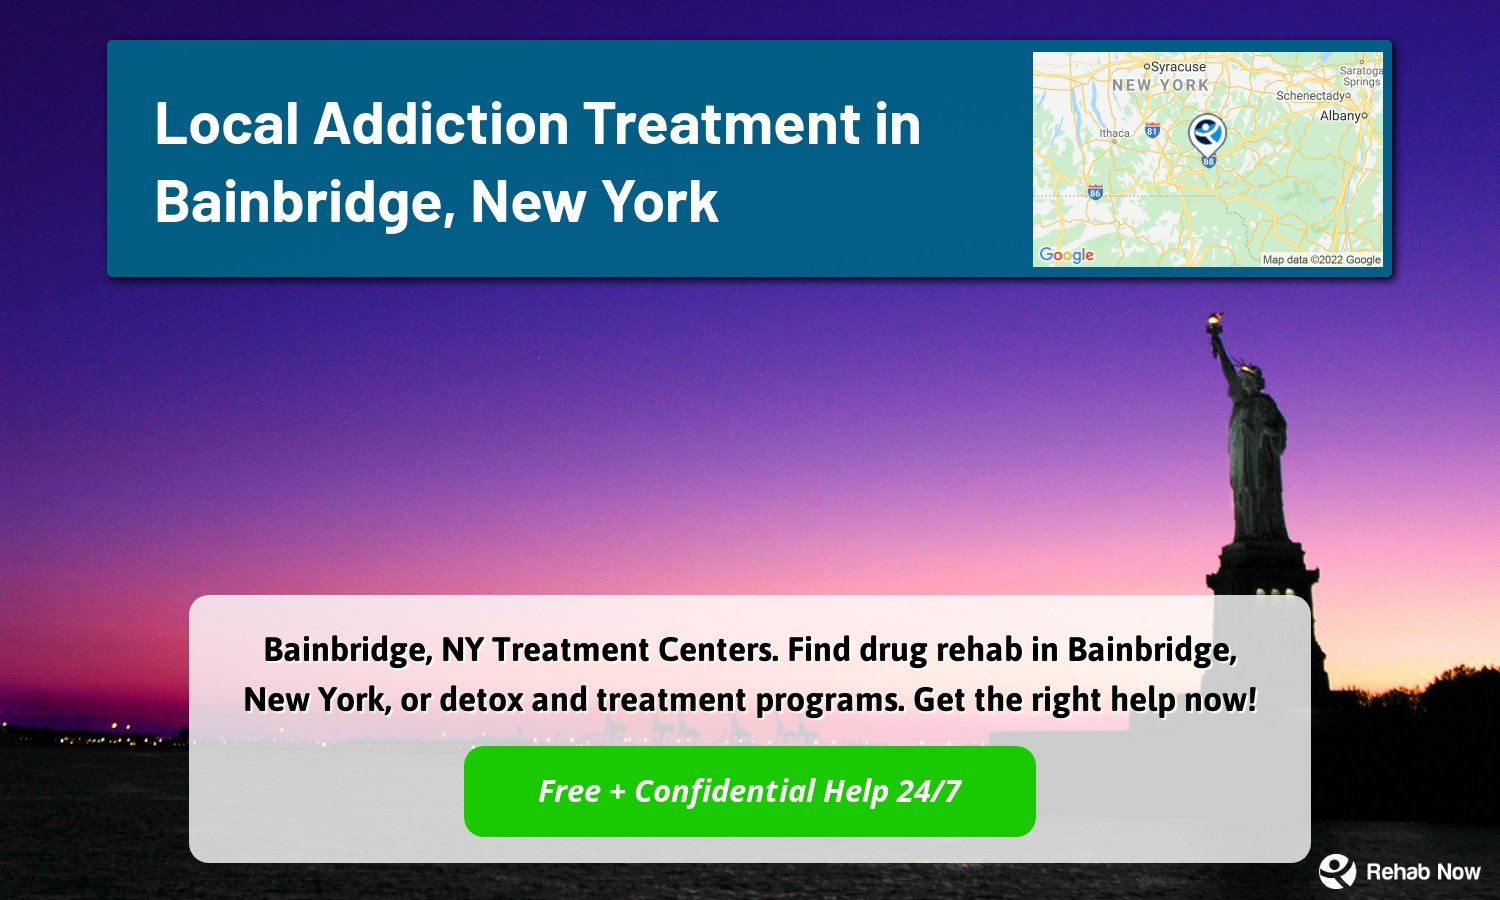 Bainbridge, NY Treatment Centers. Find drug rehab in Bainbridge, New York, or detox and treatment programs. Get the right help now!